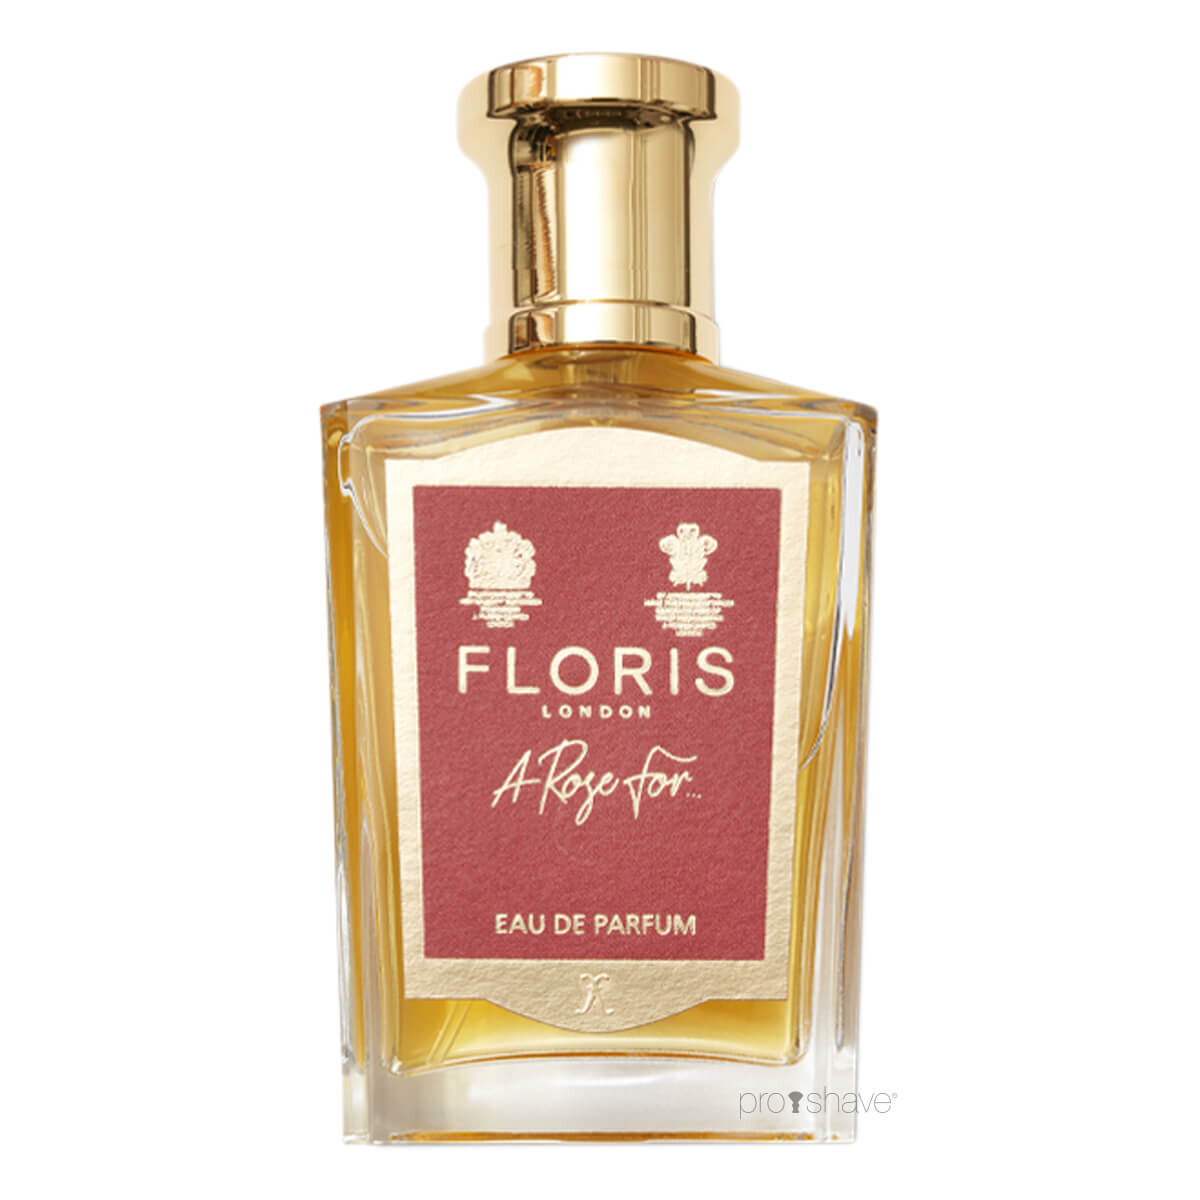 Se Floris A Rose Forâ¦, Eau de Parfum, 50 ml. hos Proshave